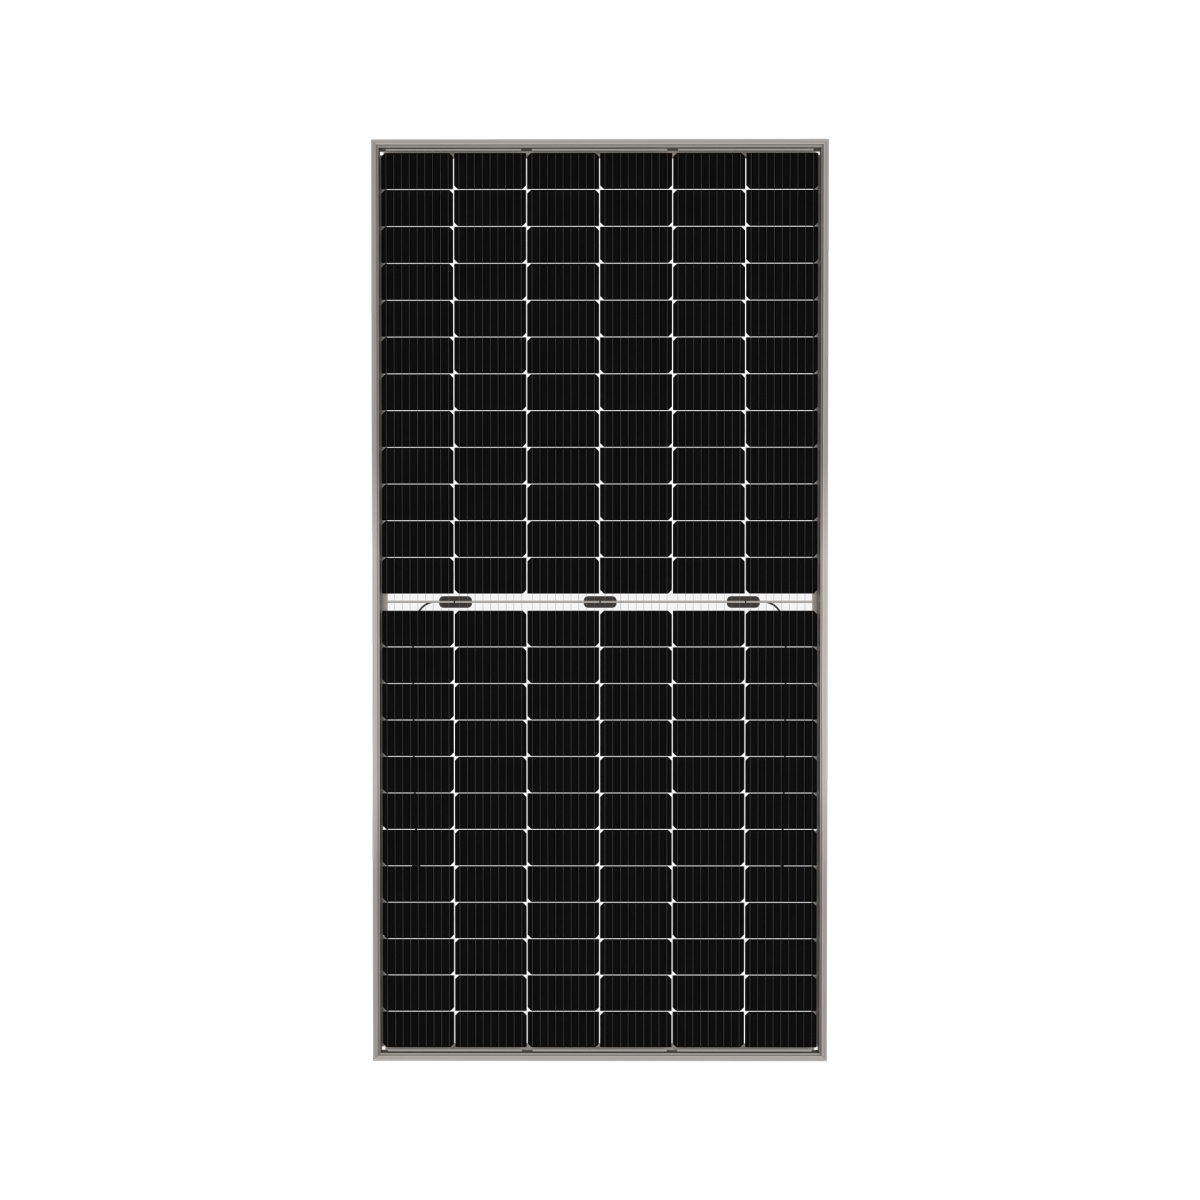 TommaTech 425 Watt 144 Percmono Bifazial Half-Cut Multi Busbar Solarpanel